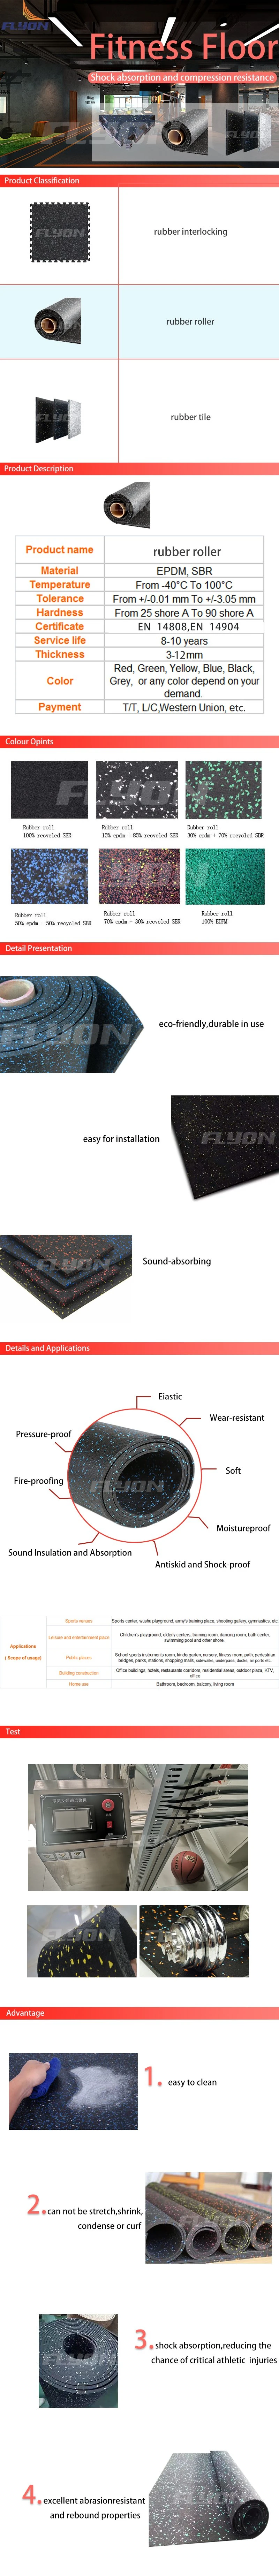 Interlocking Rubber Floor Tile for Indoor Gym Anti-Slip Protective Rubber Flooring Mat